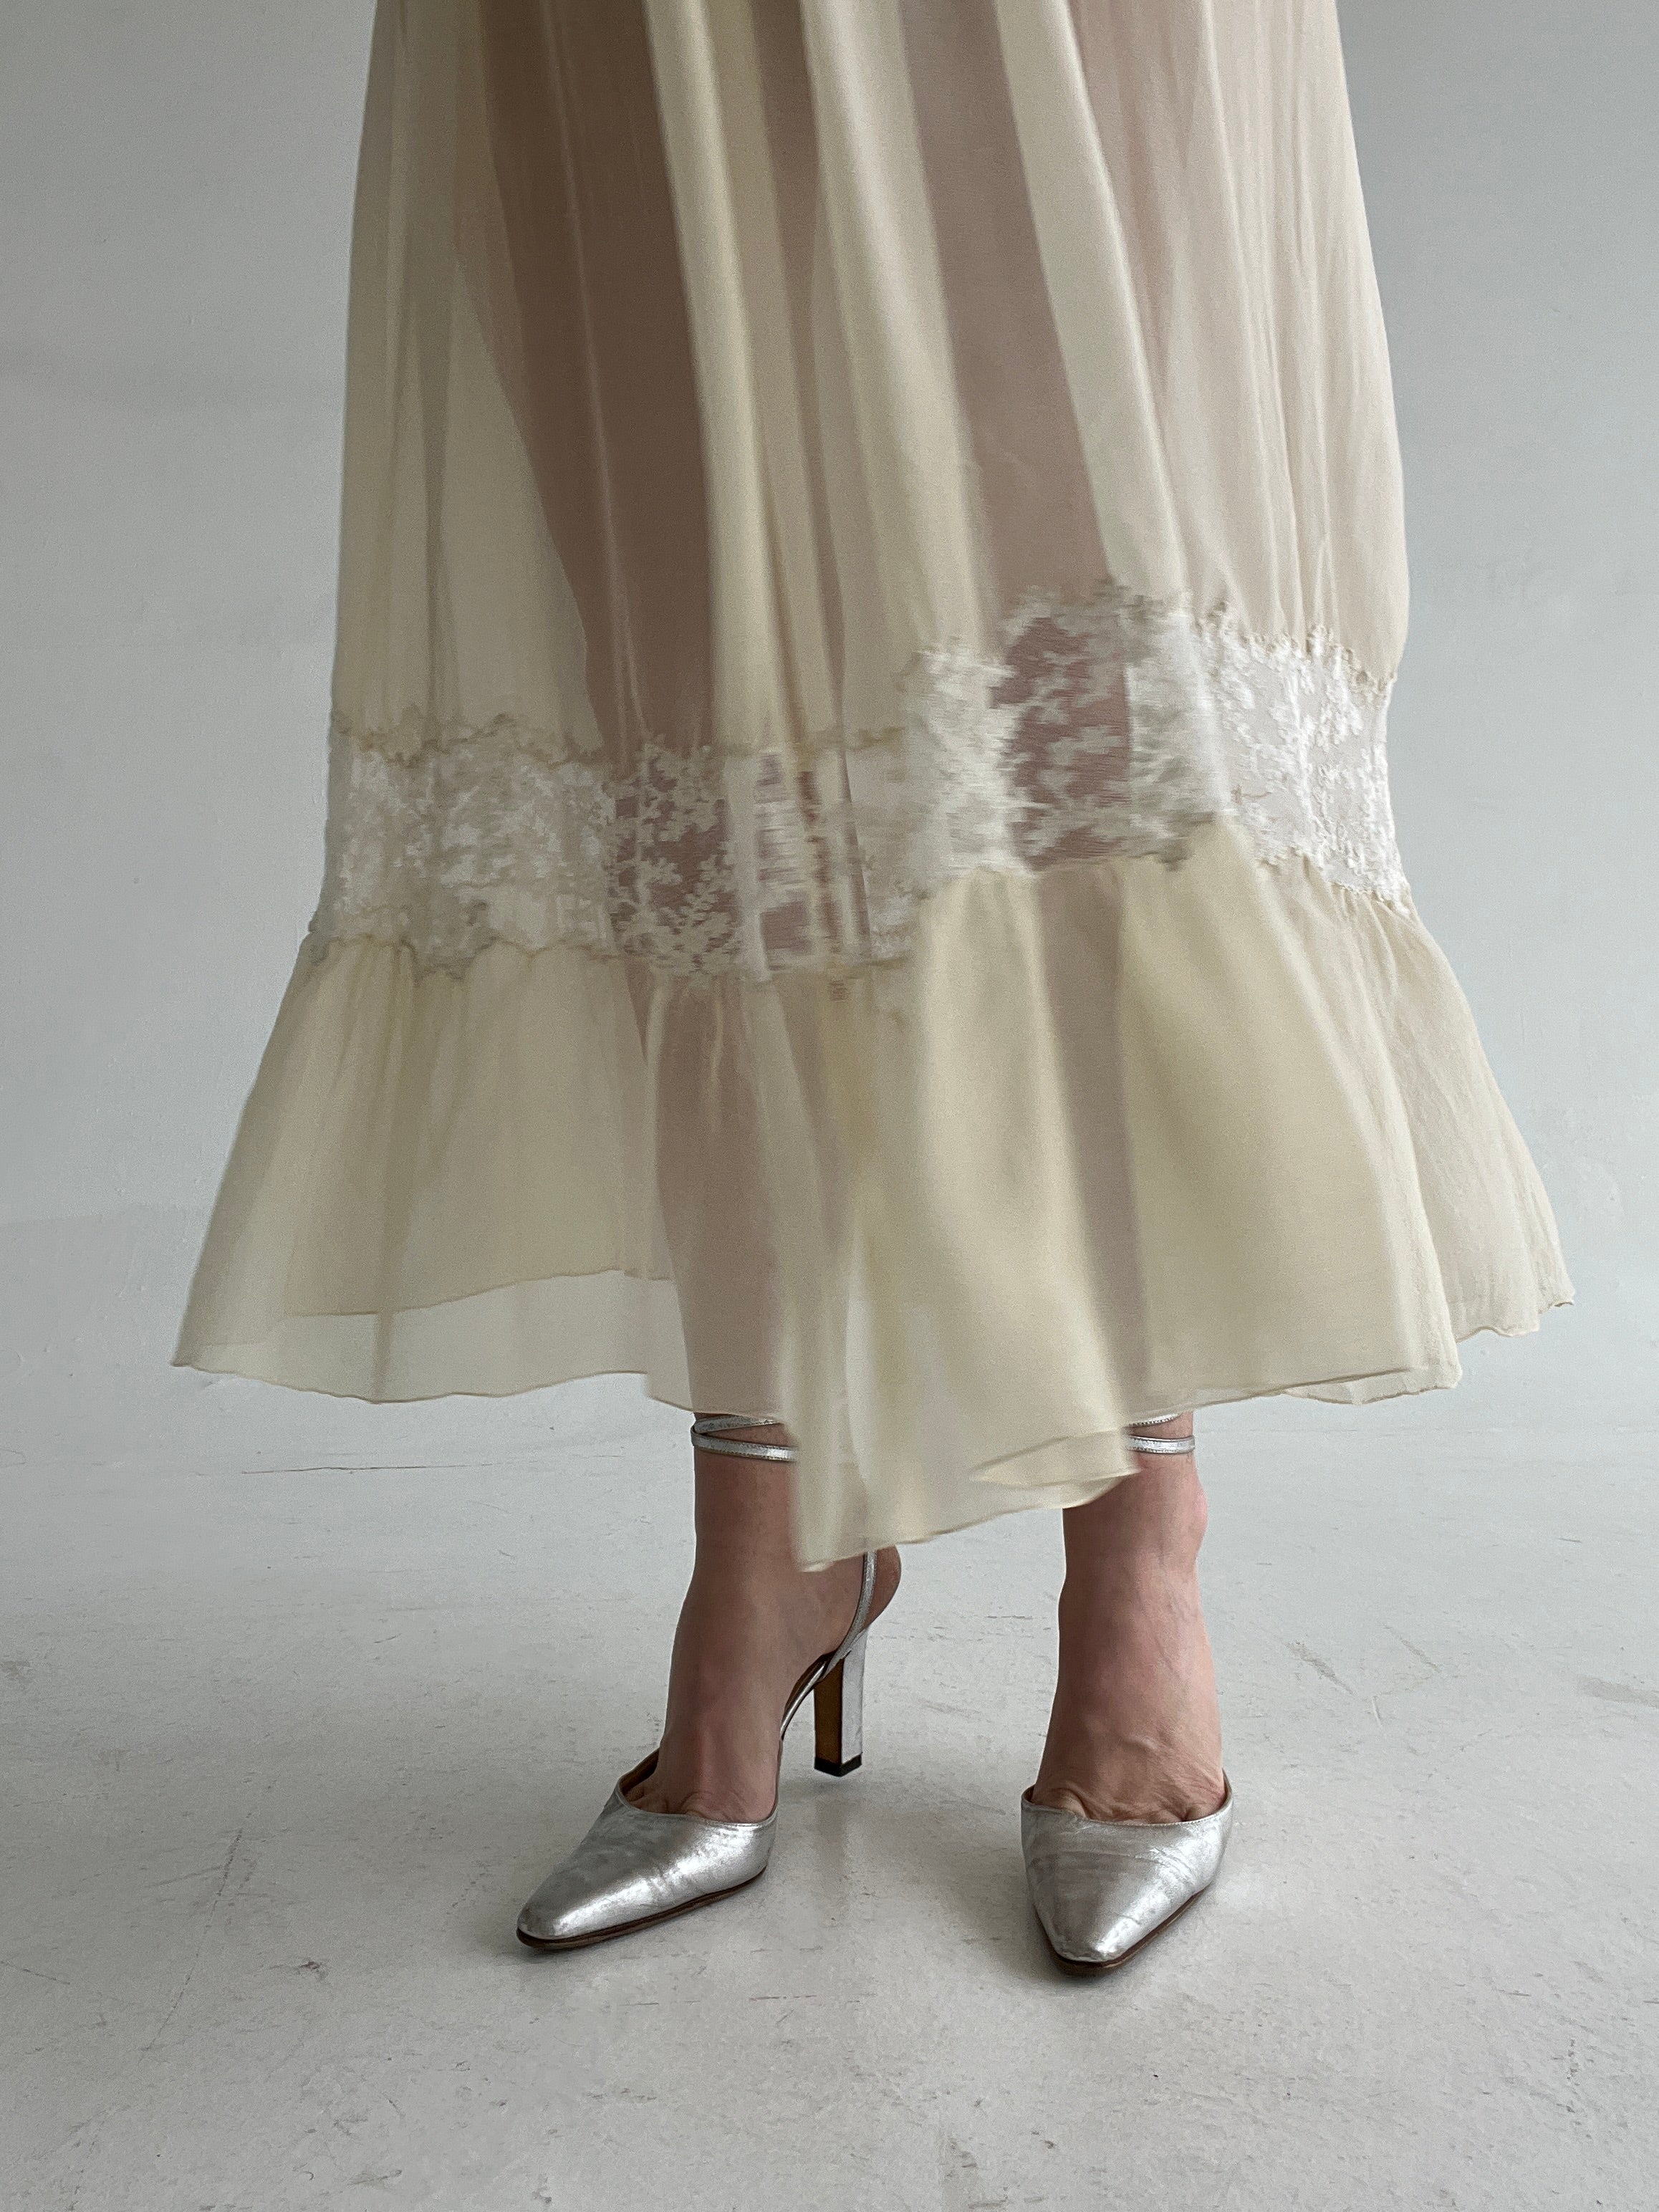 1930's Buttermilk Silk Chiffon Dress with White Lace